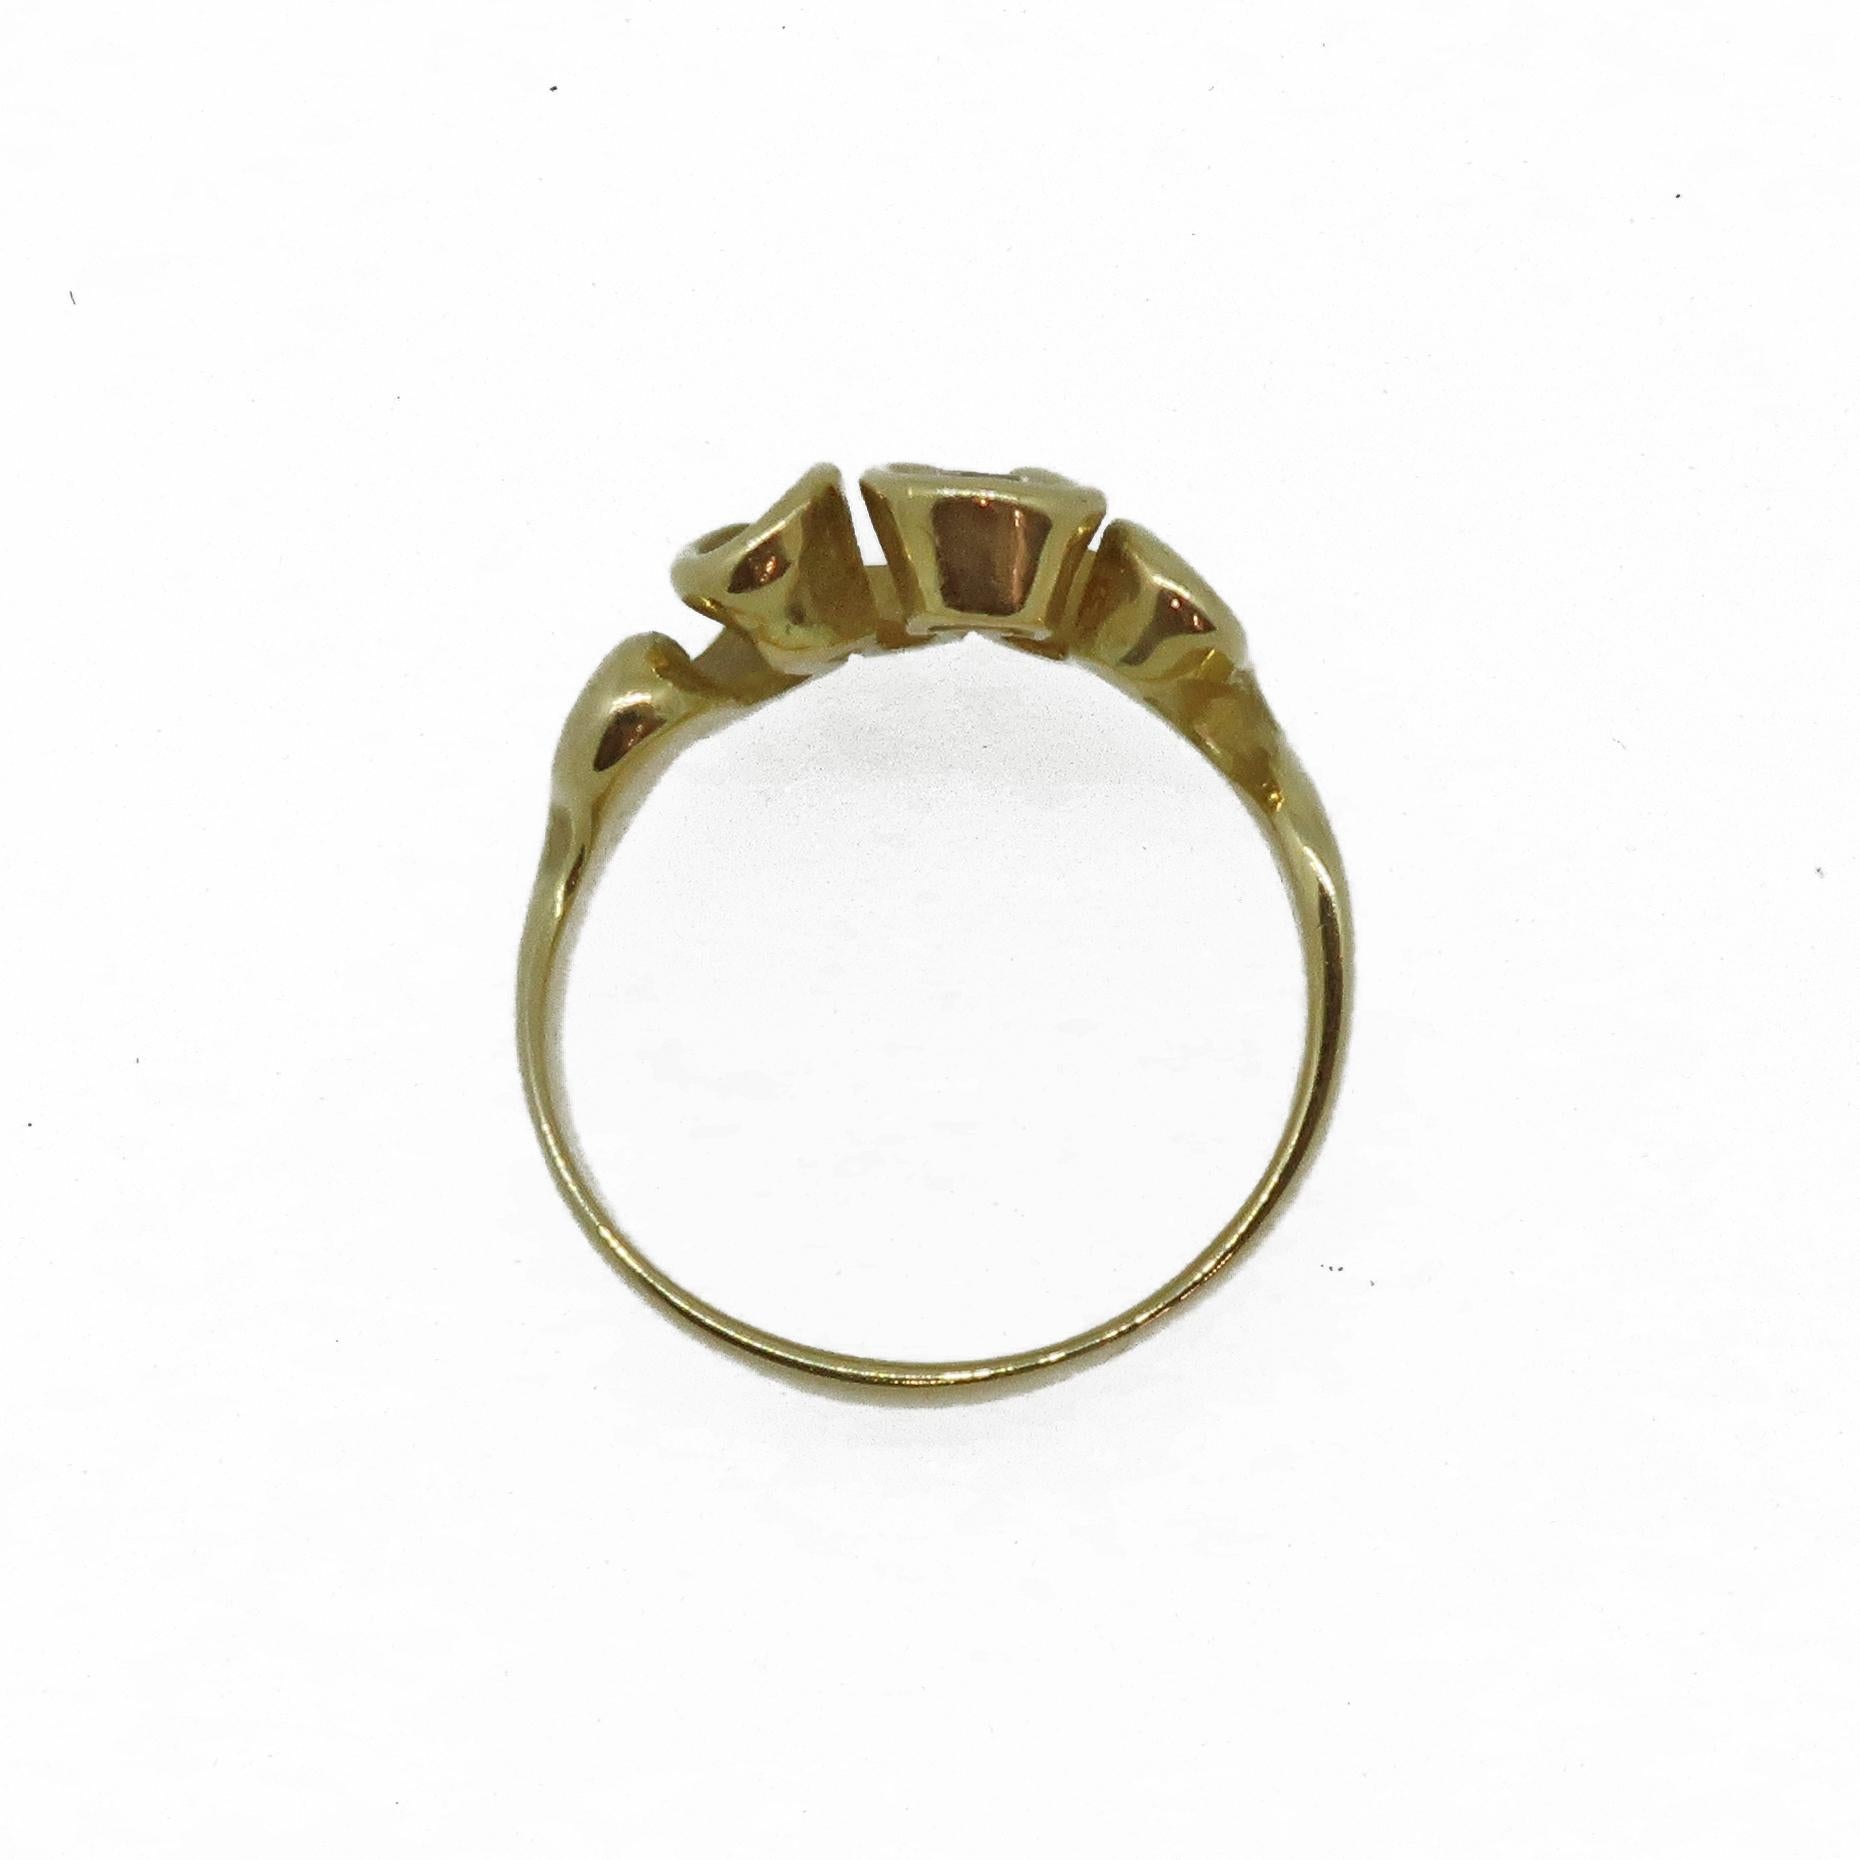 Brilliant Cut Swirl Diamond Solitaire Ring 18 Karat Yellow Gold